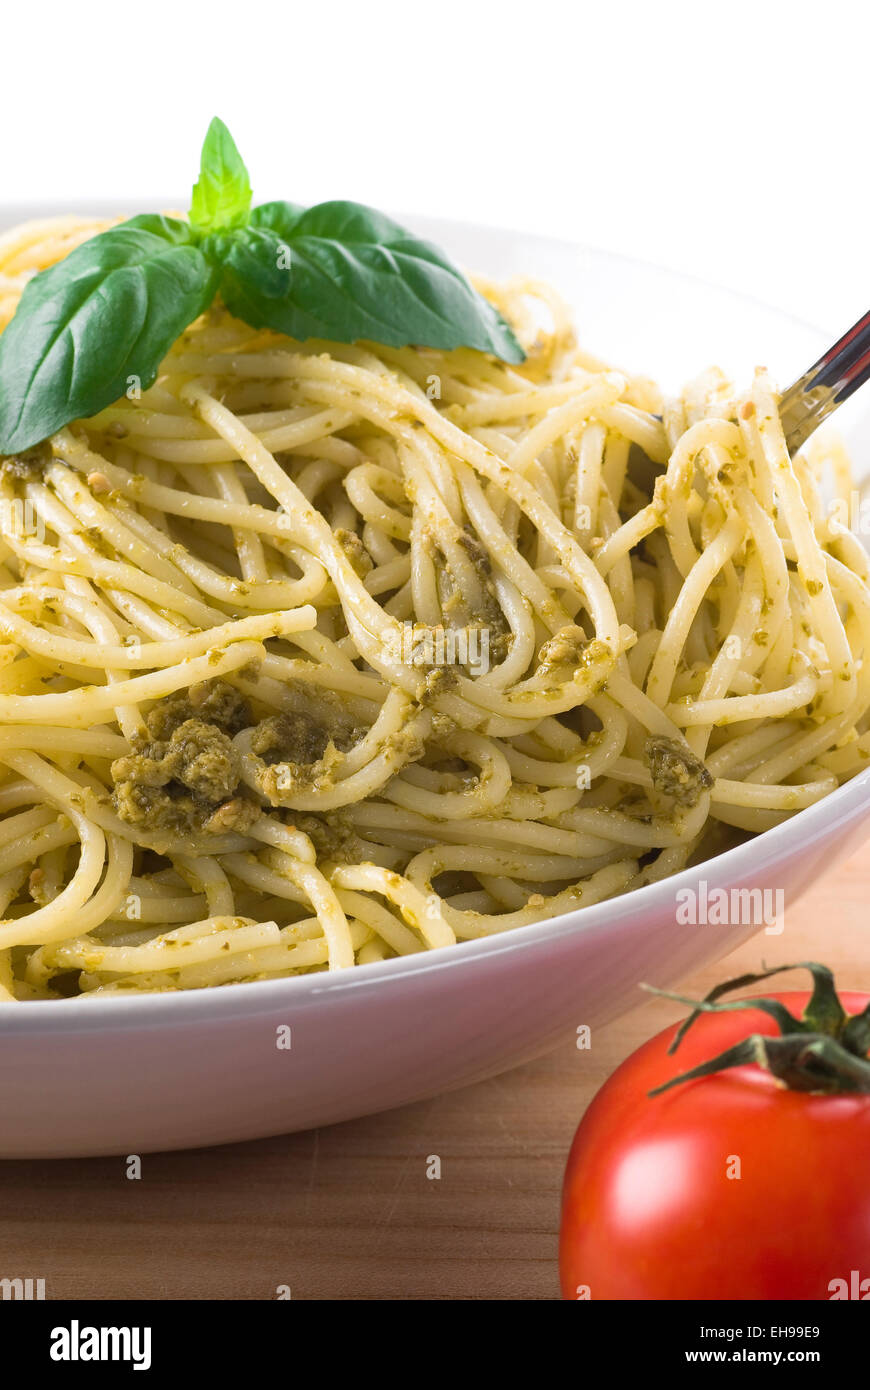 Spaghetti with green pesto in a bowl. Stock Photo